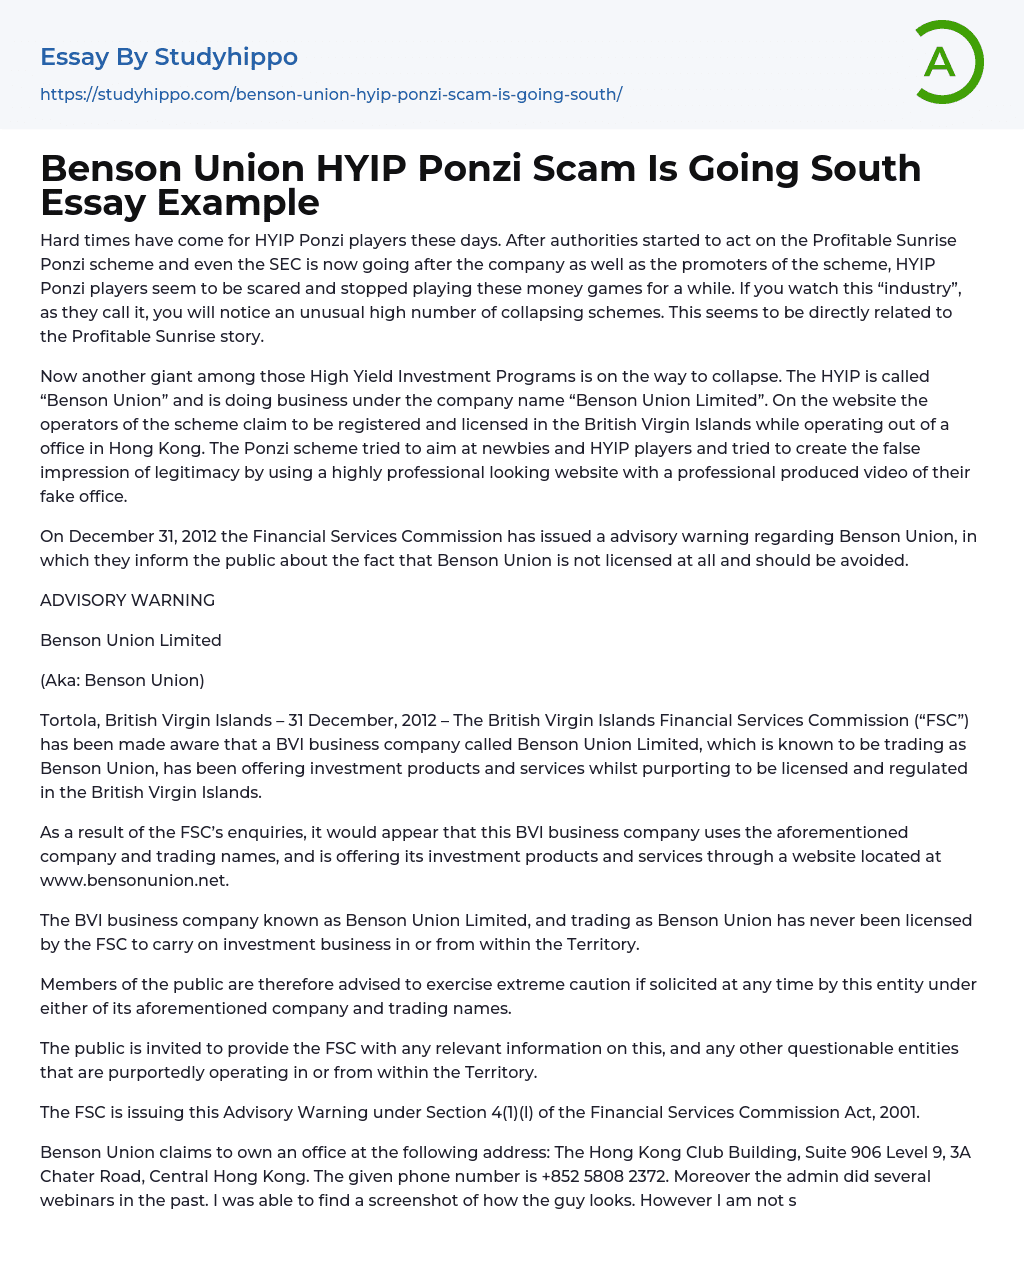 Benson Union HYIP Ponzi Scam Is Going South Essay Example